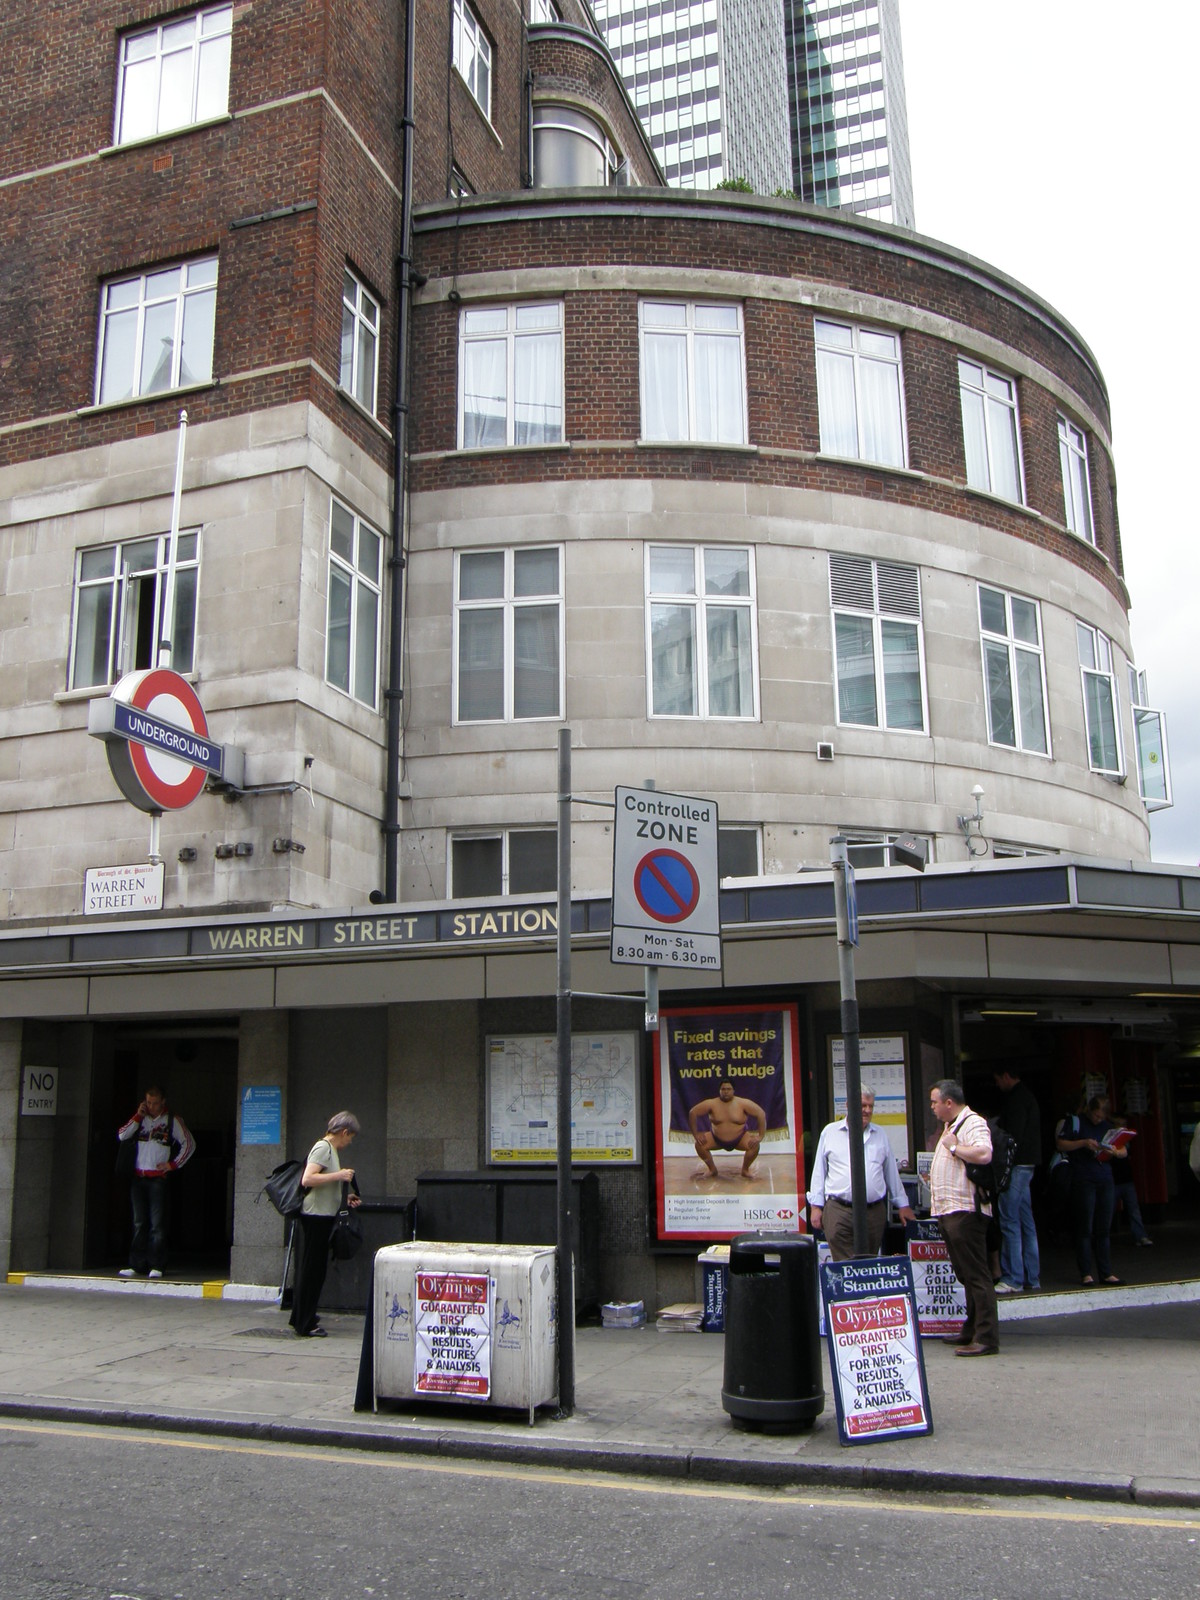 Warren Street station